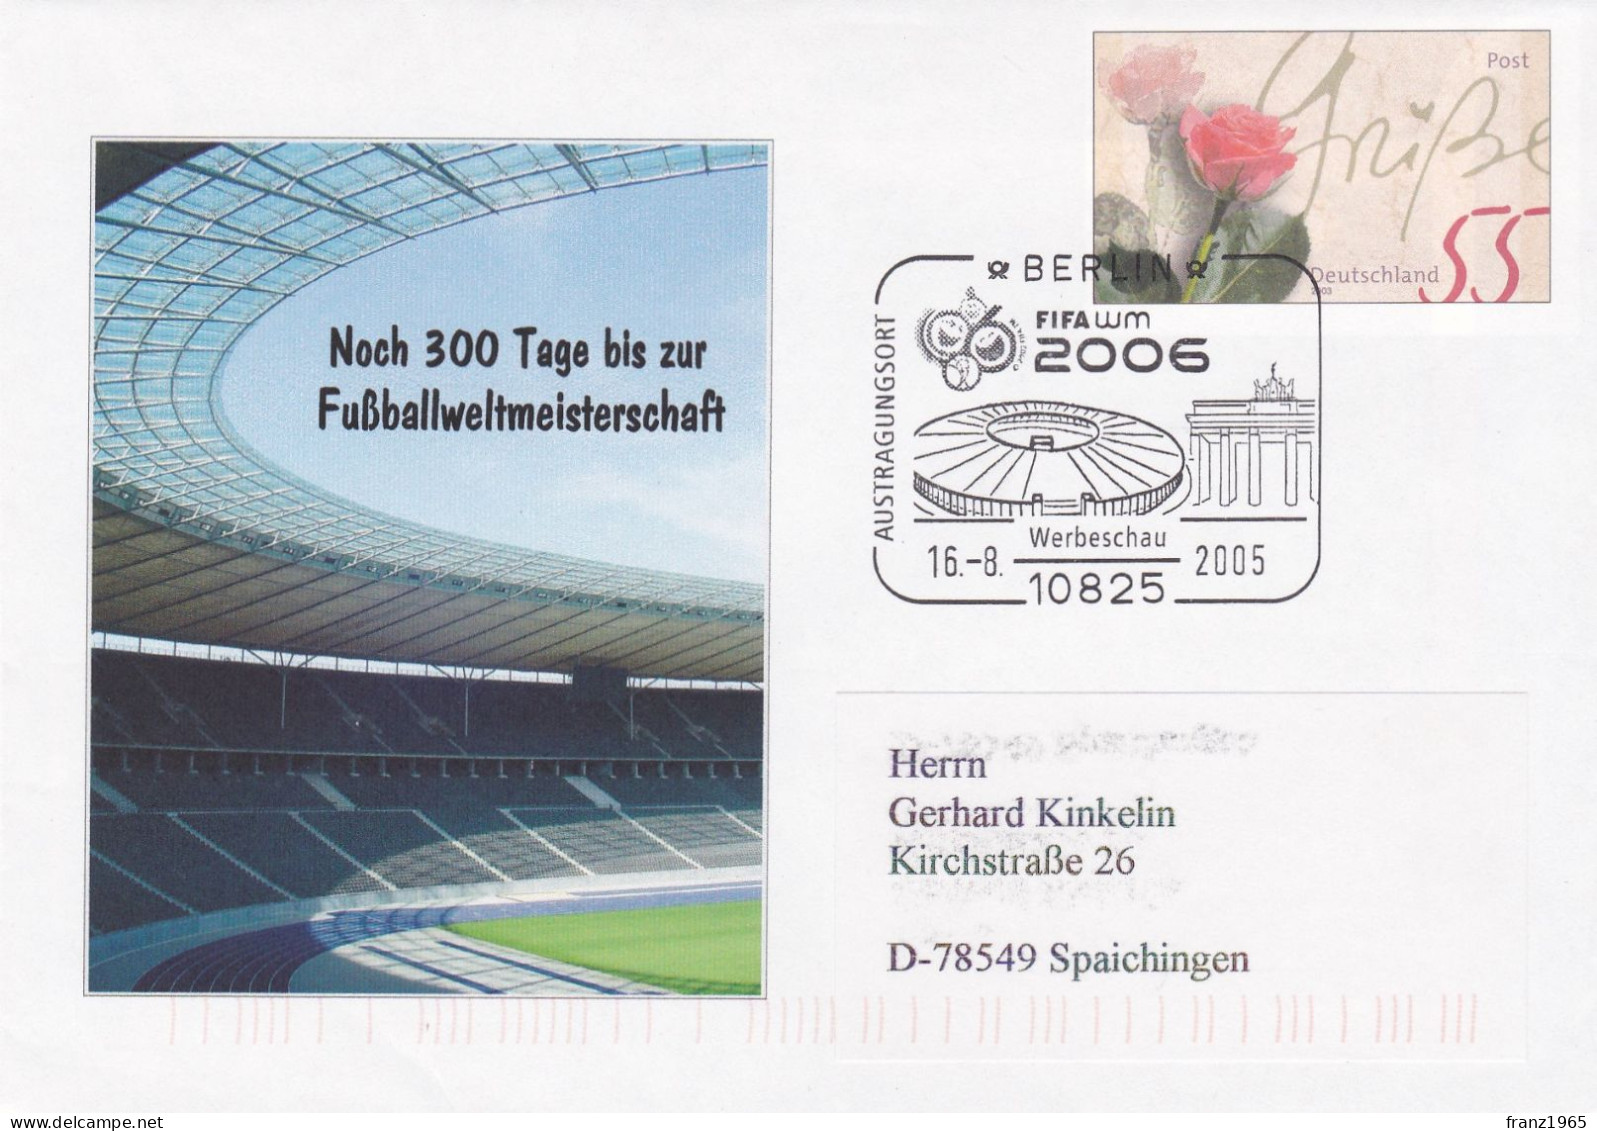 FIFA-WM 2006 - Berlin,16.8.2005 - 2006 – Germany